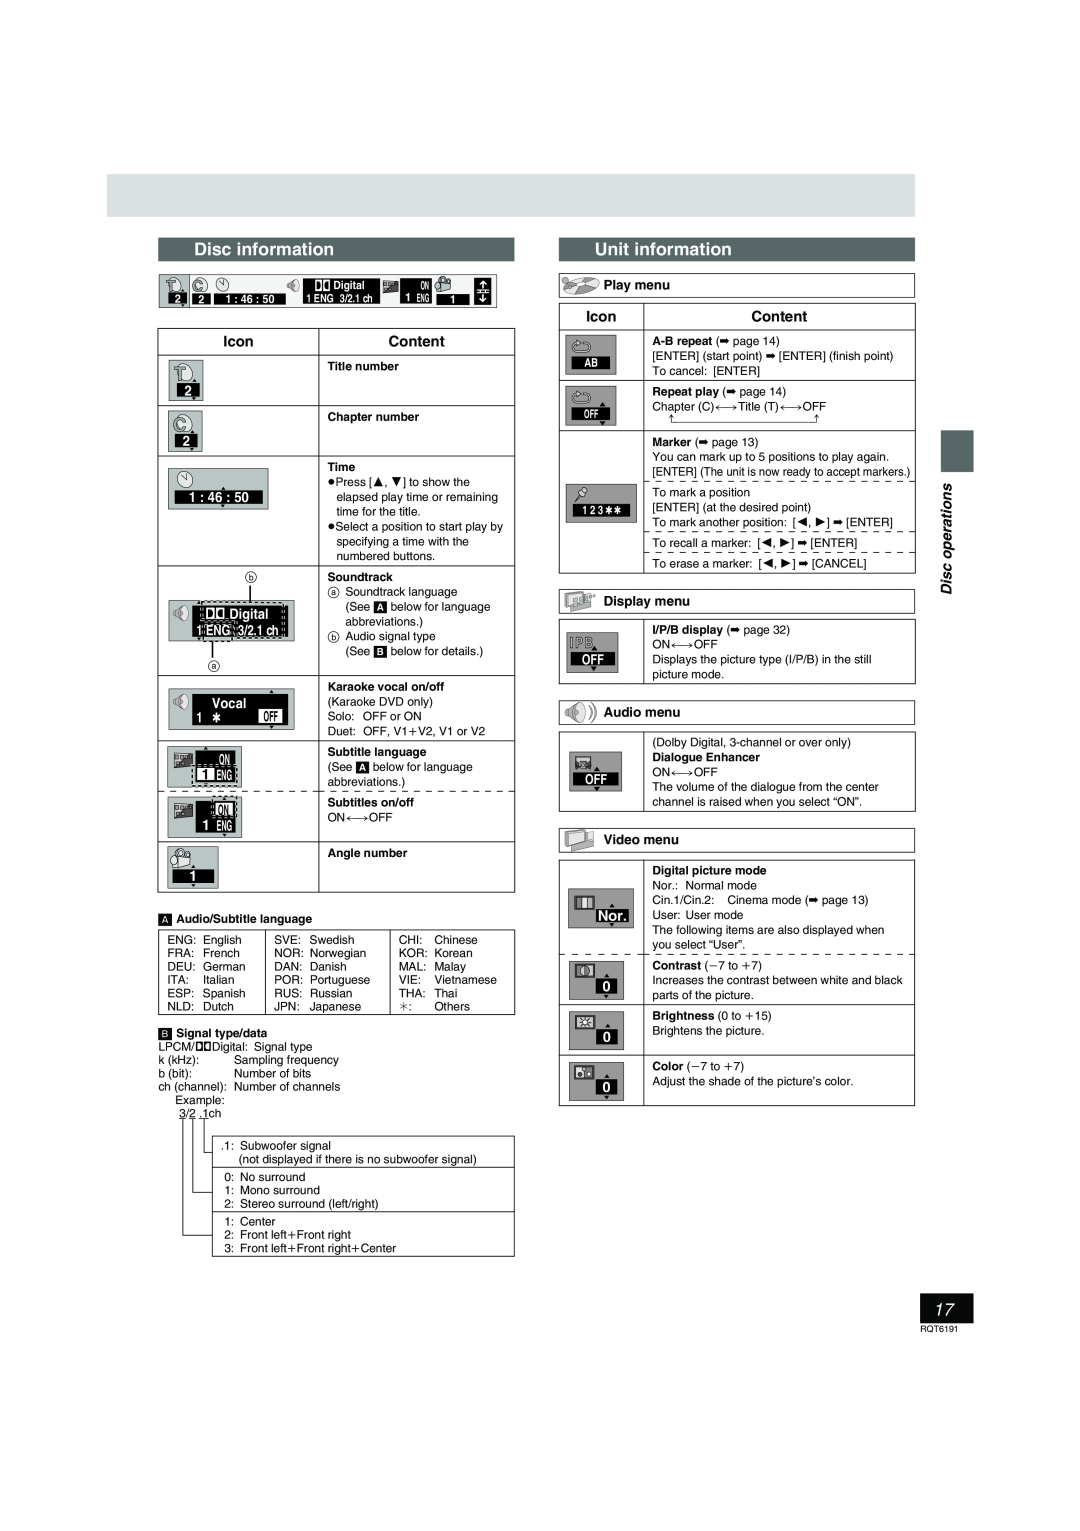 Panasonic SC-HT67 warranty Disc information, Unit information, Î Digital, 1 ENG, 3/2.1 ch, Vocal 